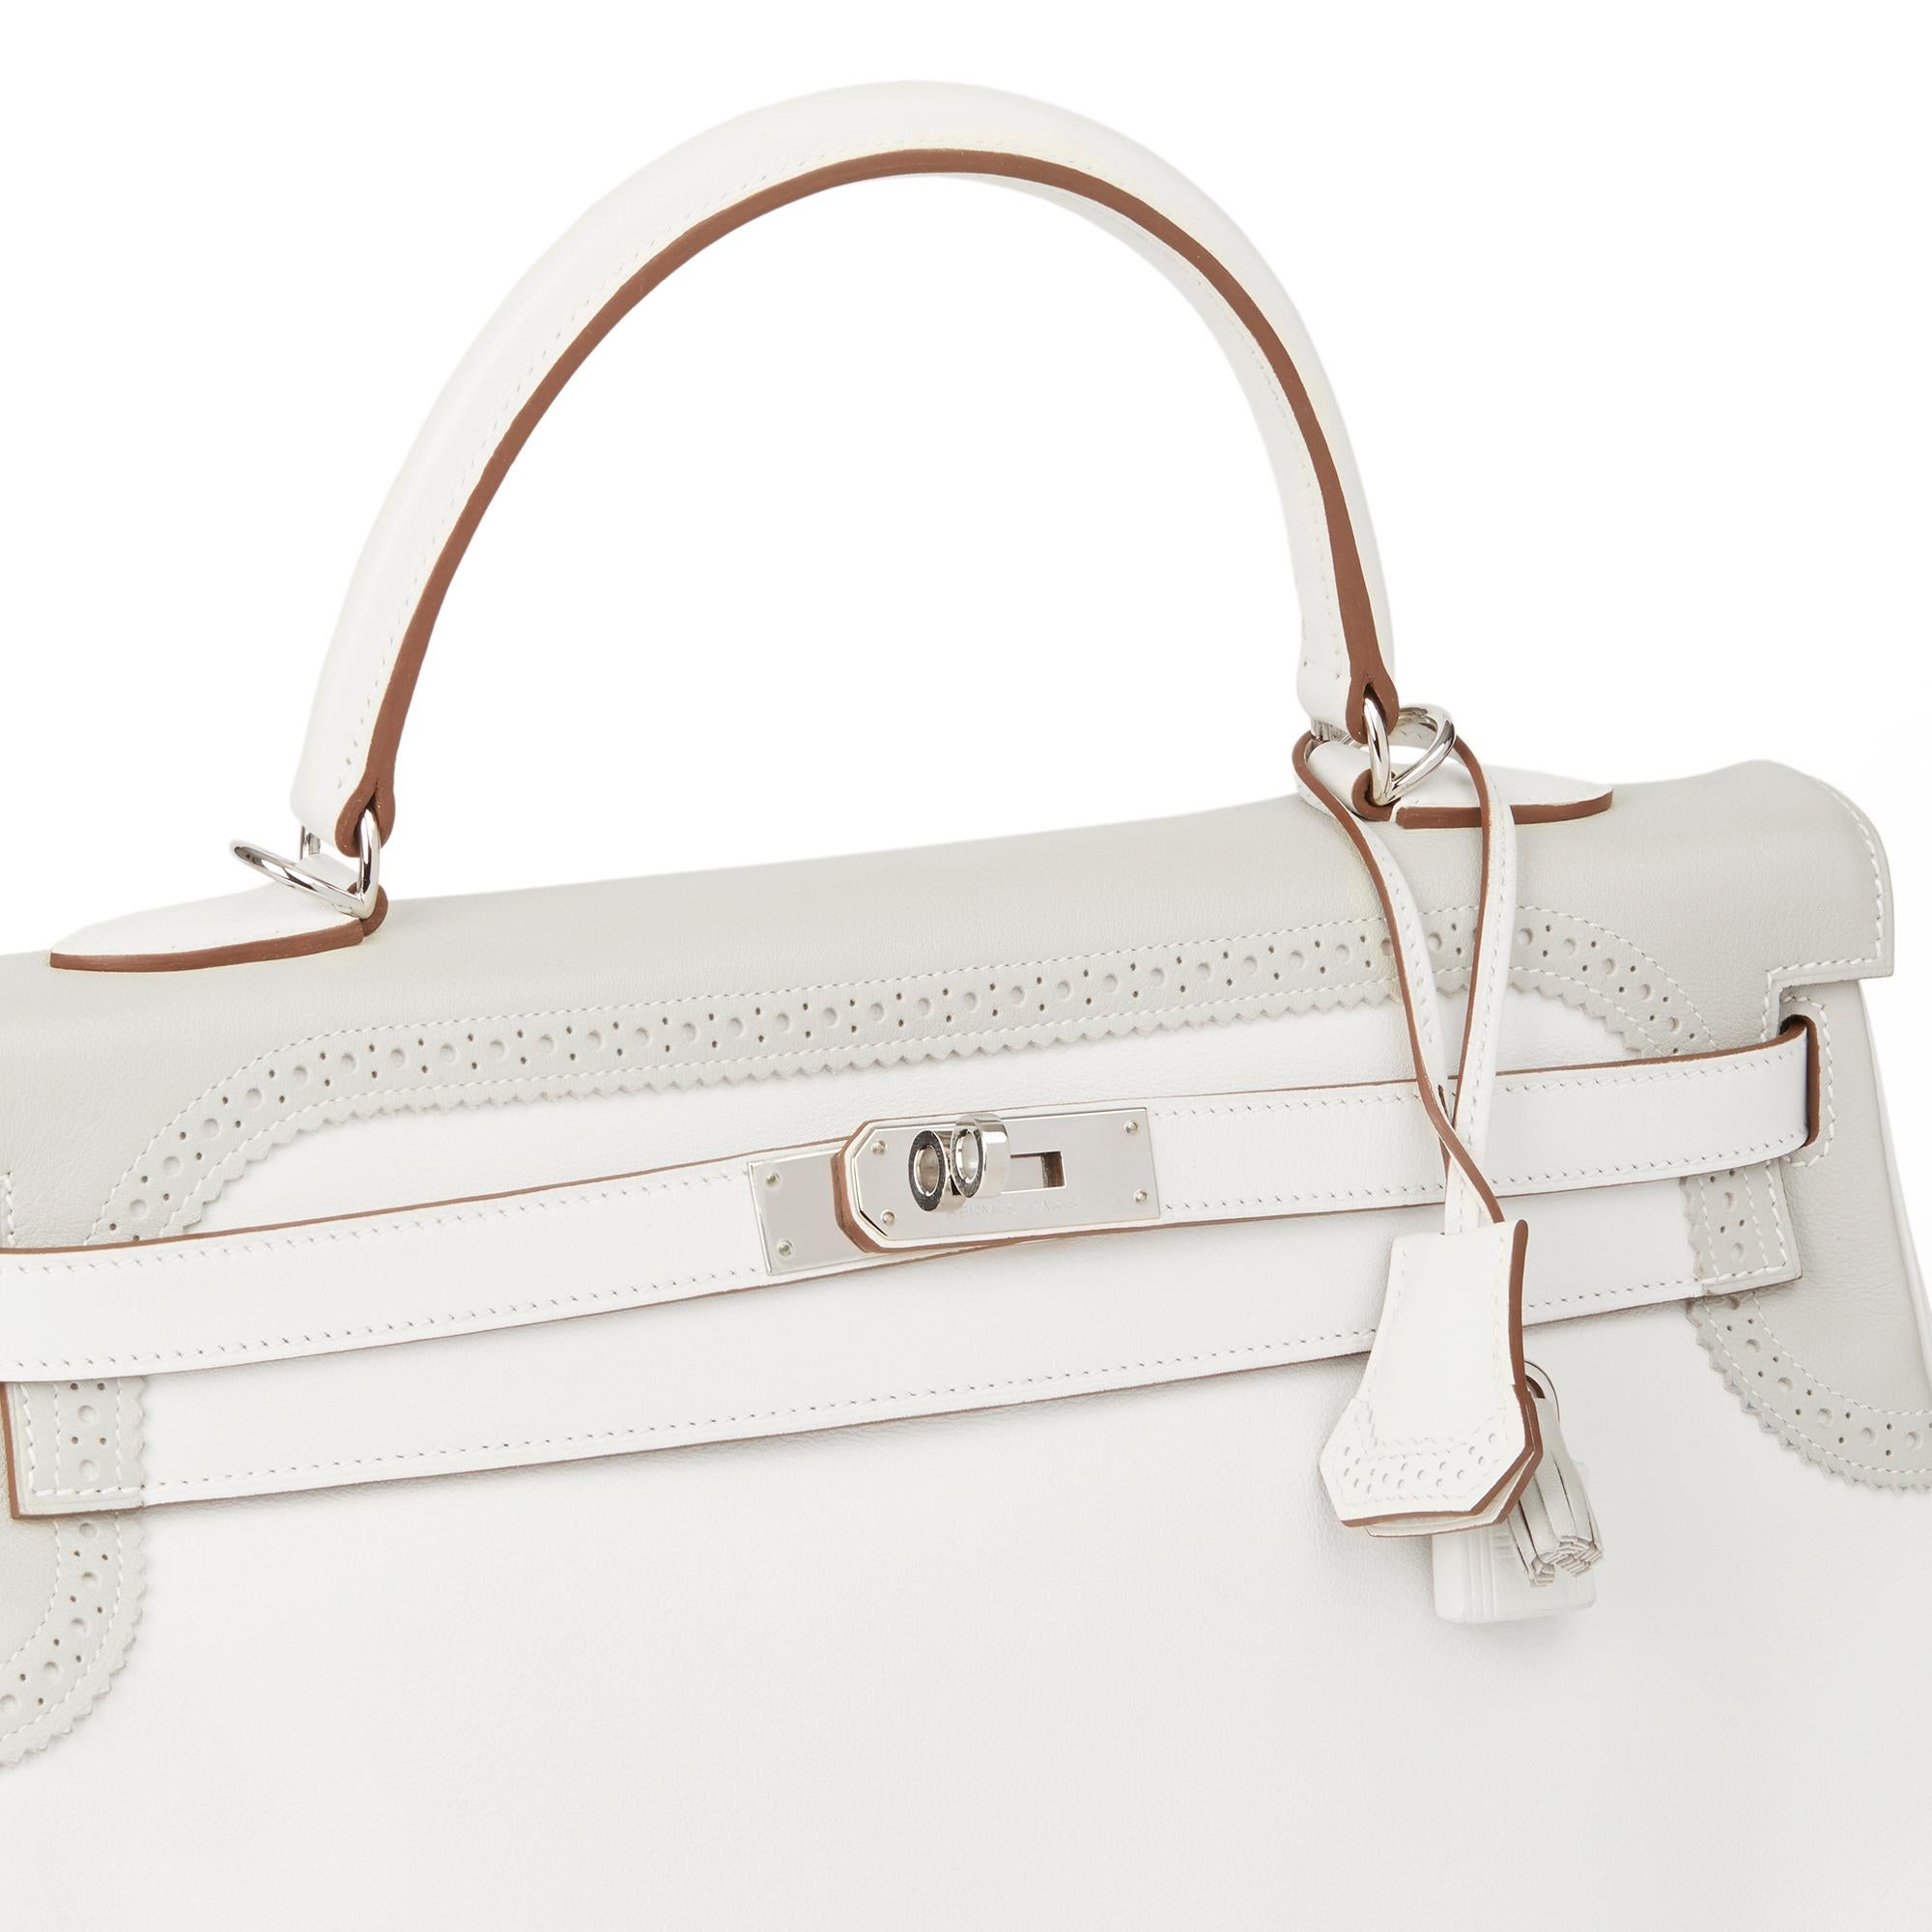 2012 Hermès Blanc & Gris Perle Swift Leather Ghillies Kelly 35cm Retourne 2